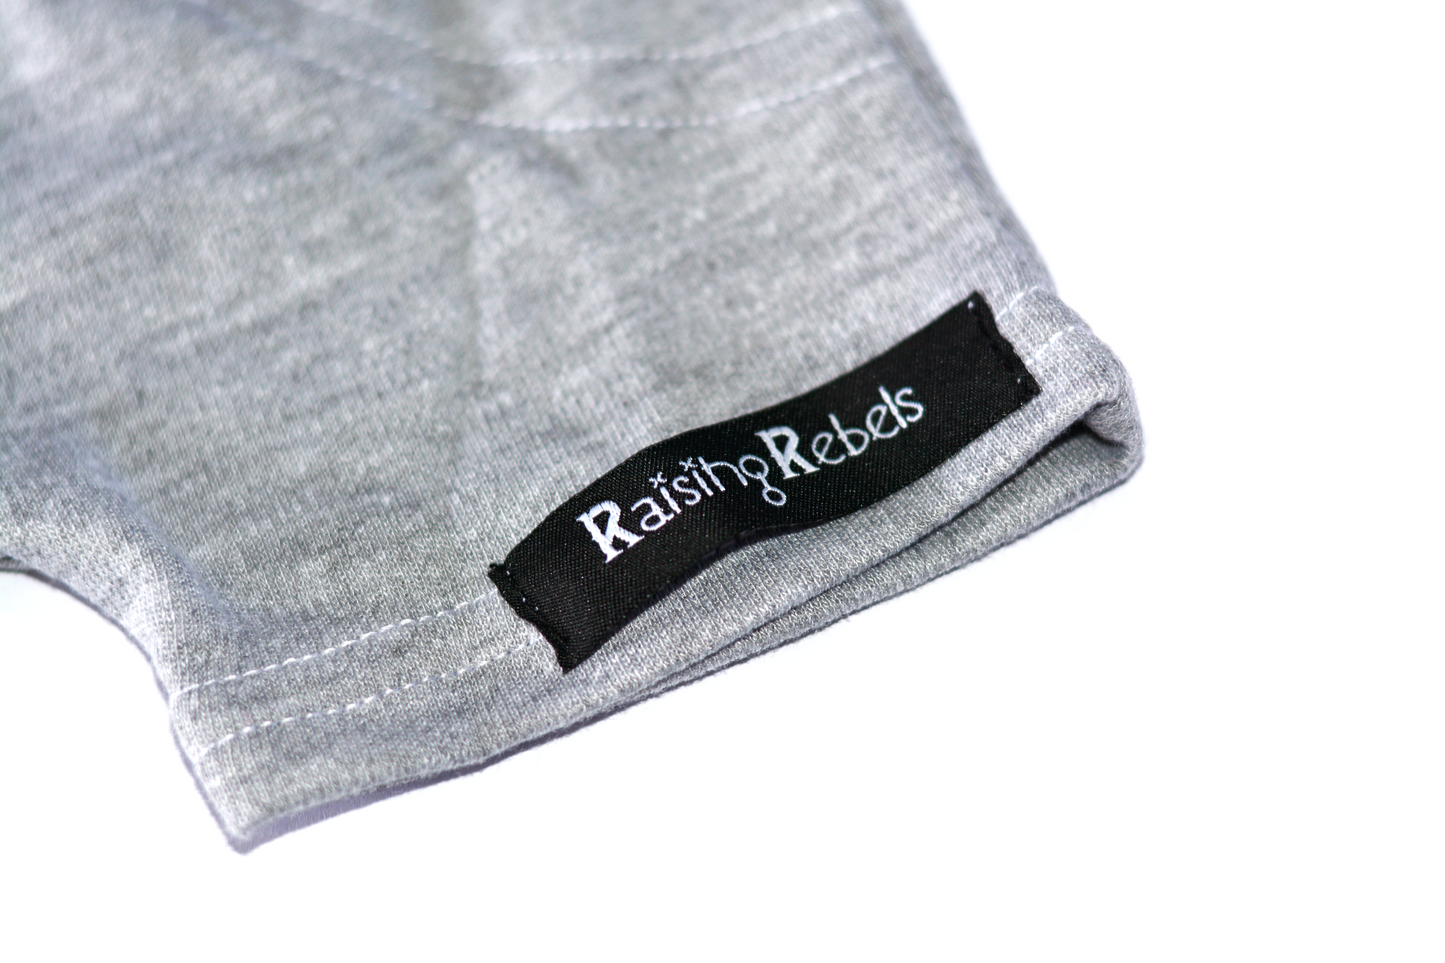 Raising Rebels Logo on Grey Baby Shorts